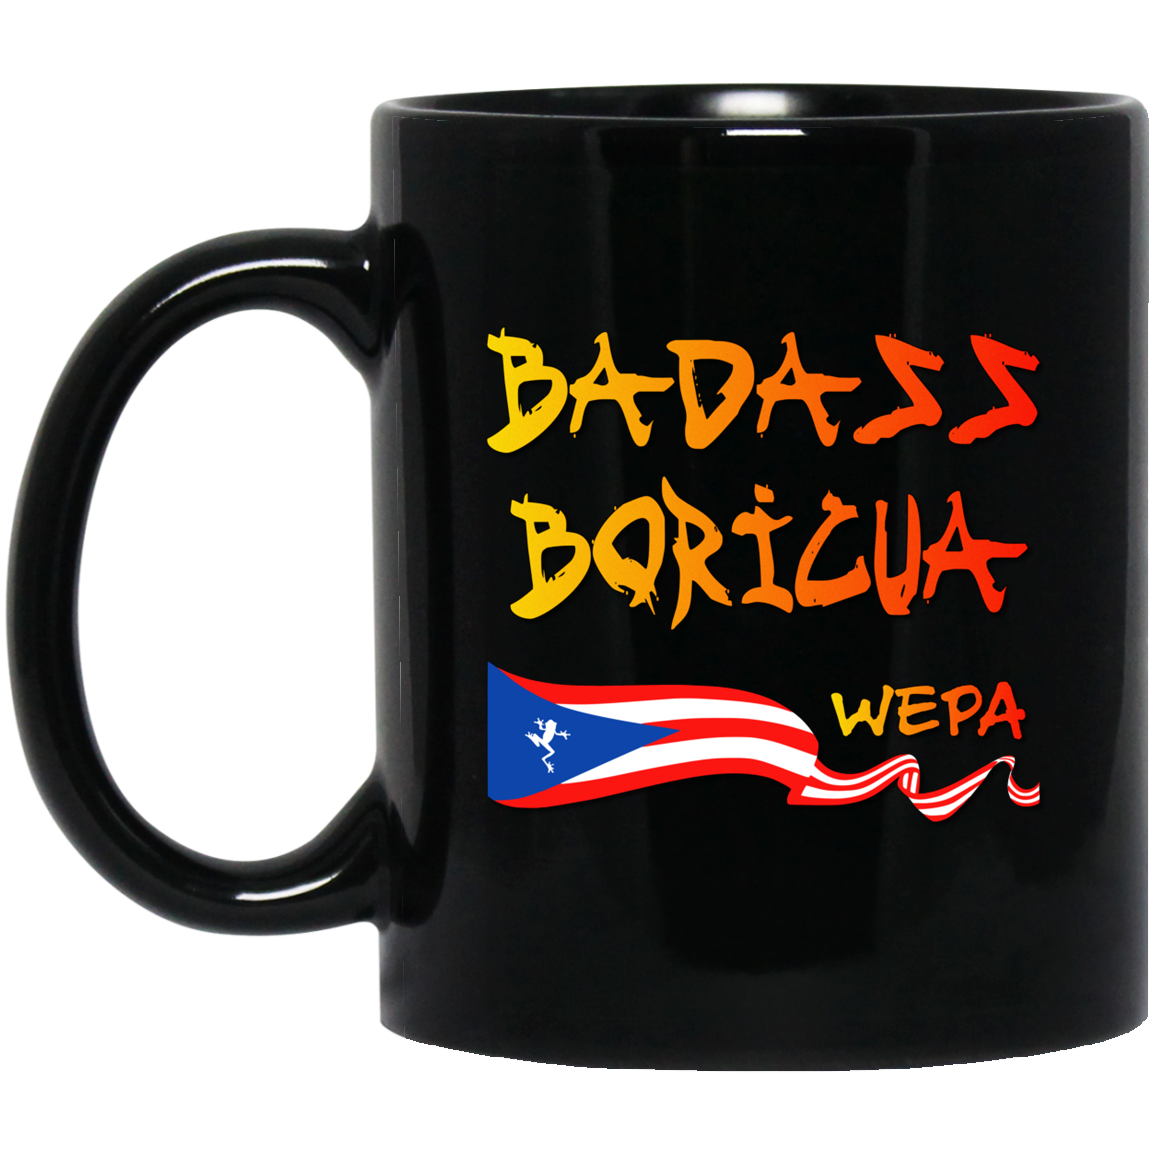 Badass Boricua Wepa 11 oz. Black Mug